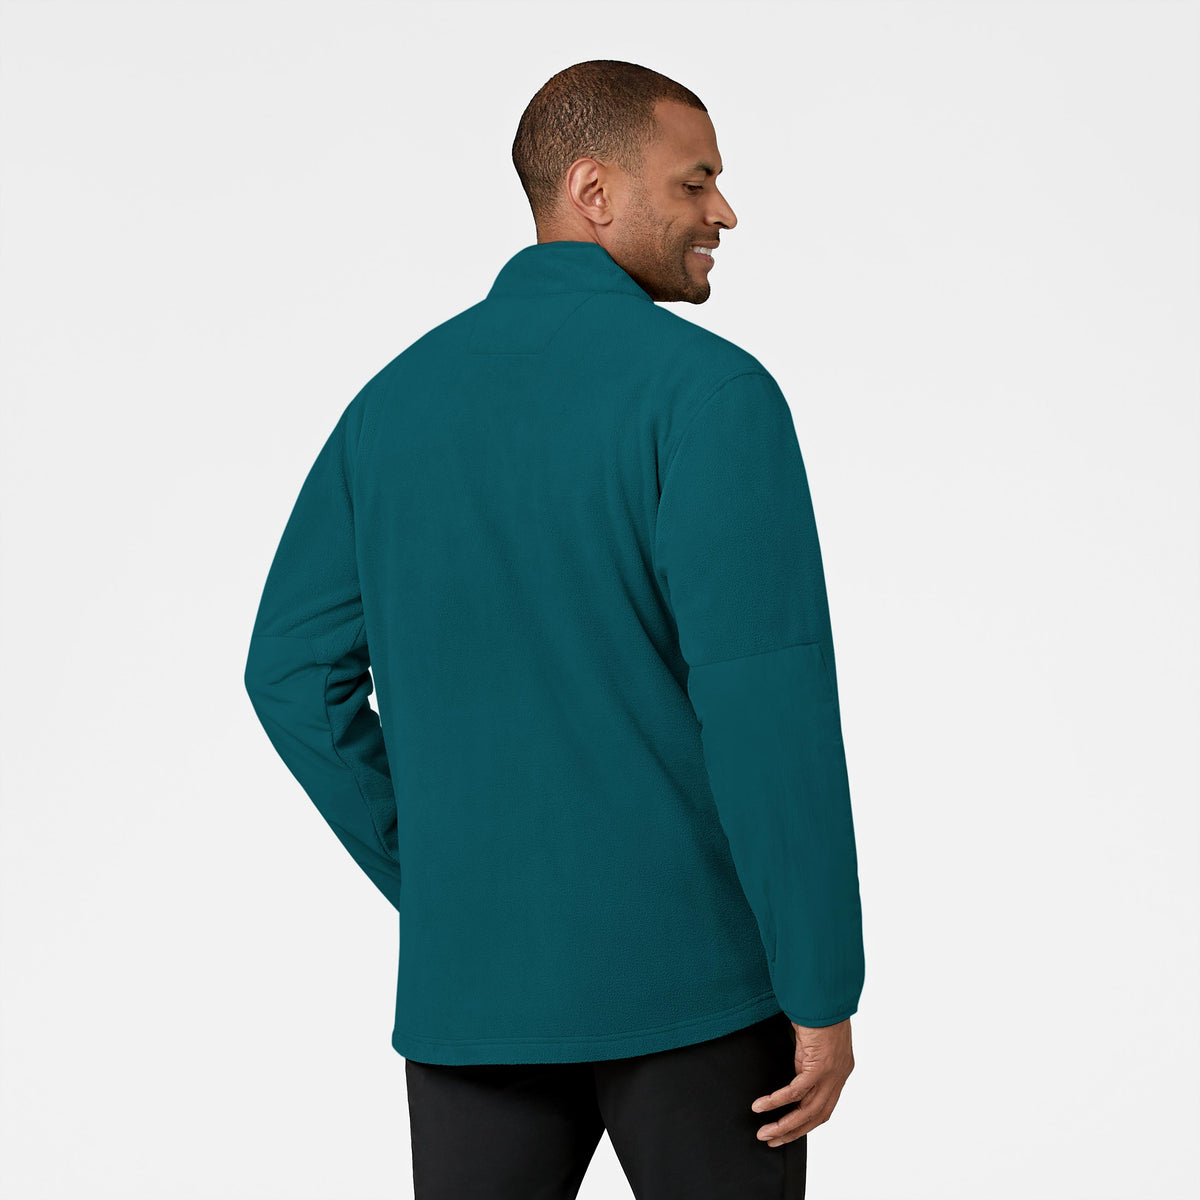 Slate Men's Micro Fleece Zip Jacket Caribbean Blue back view